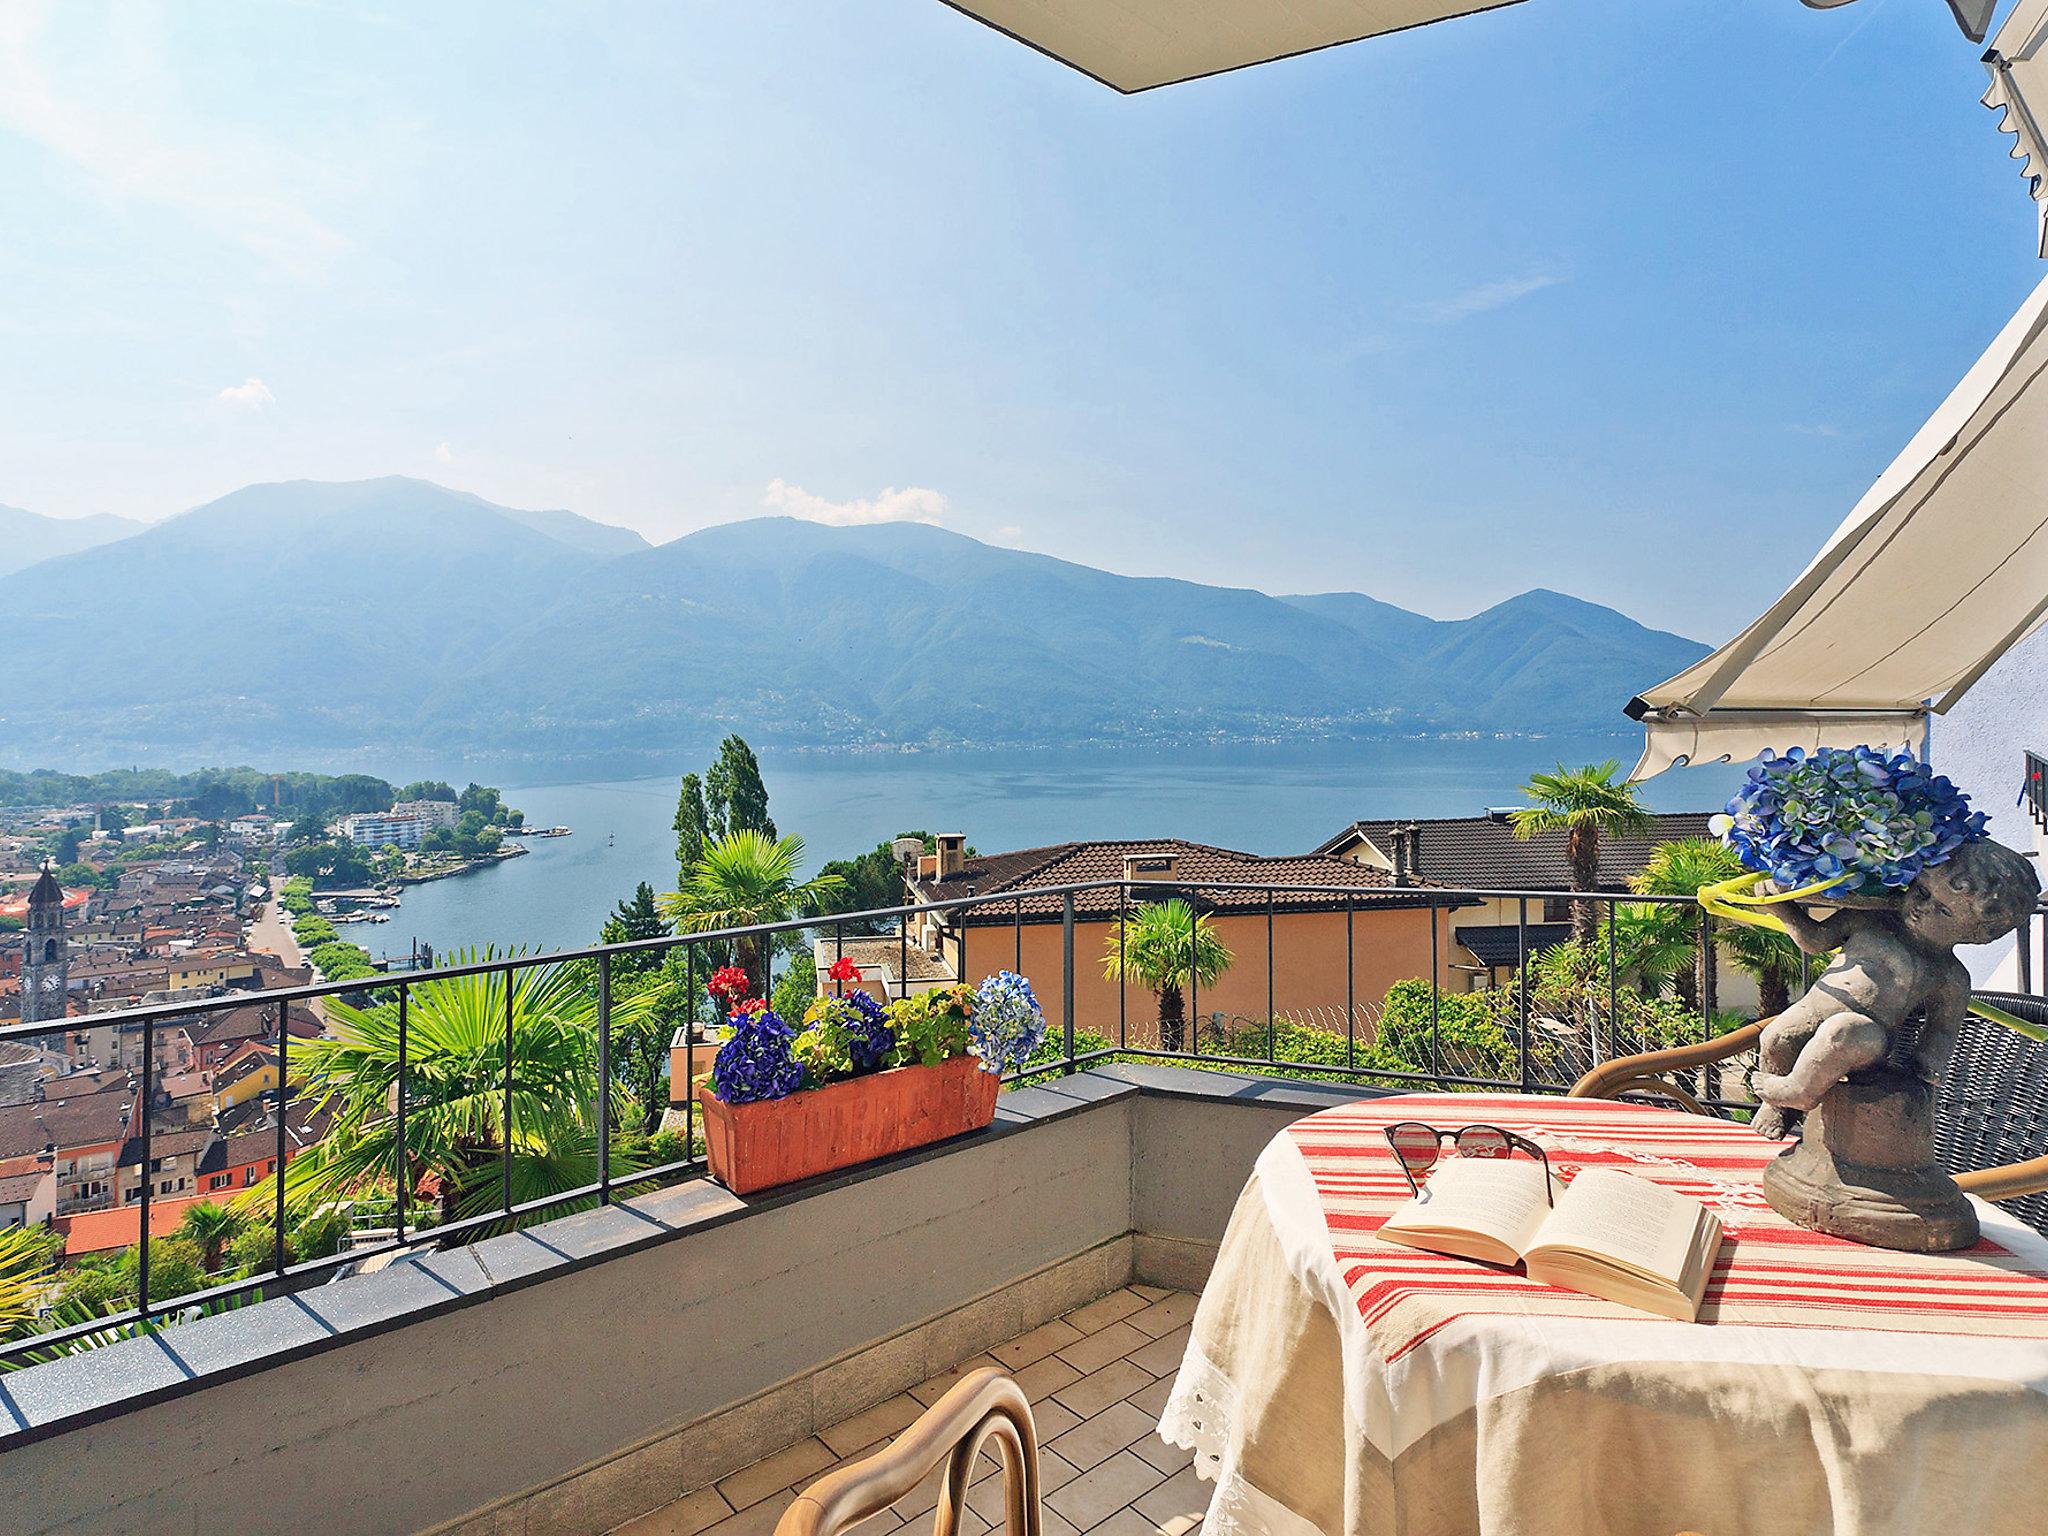 Foto 6 - Apartment in Ascona mit blick auf die berge